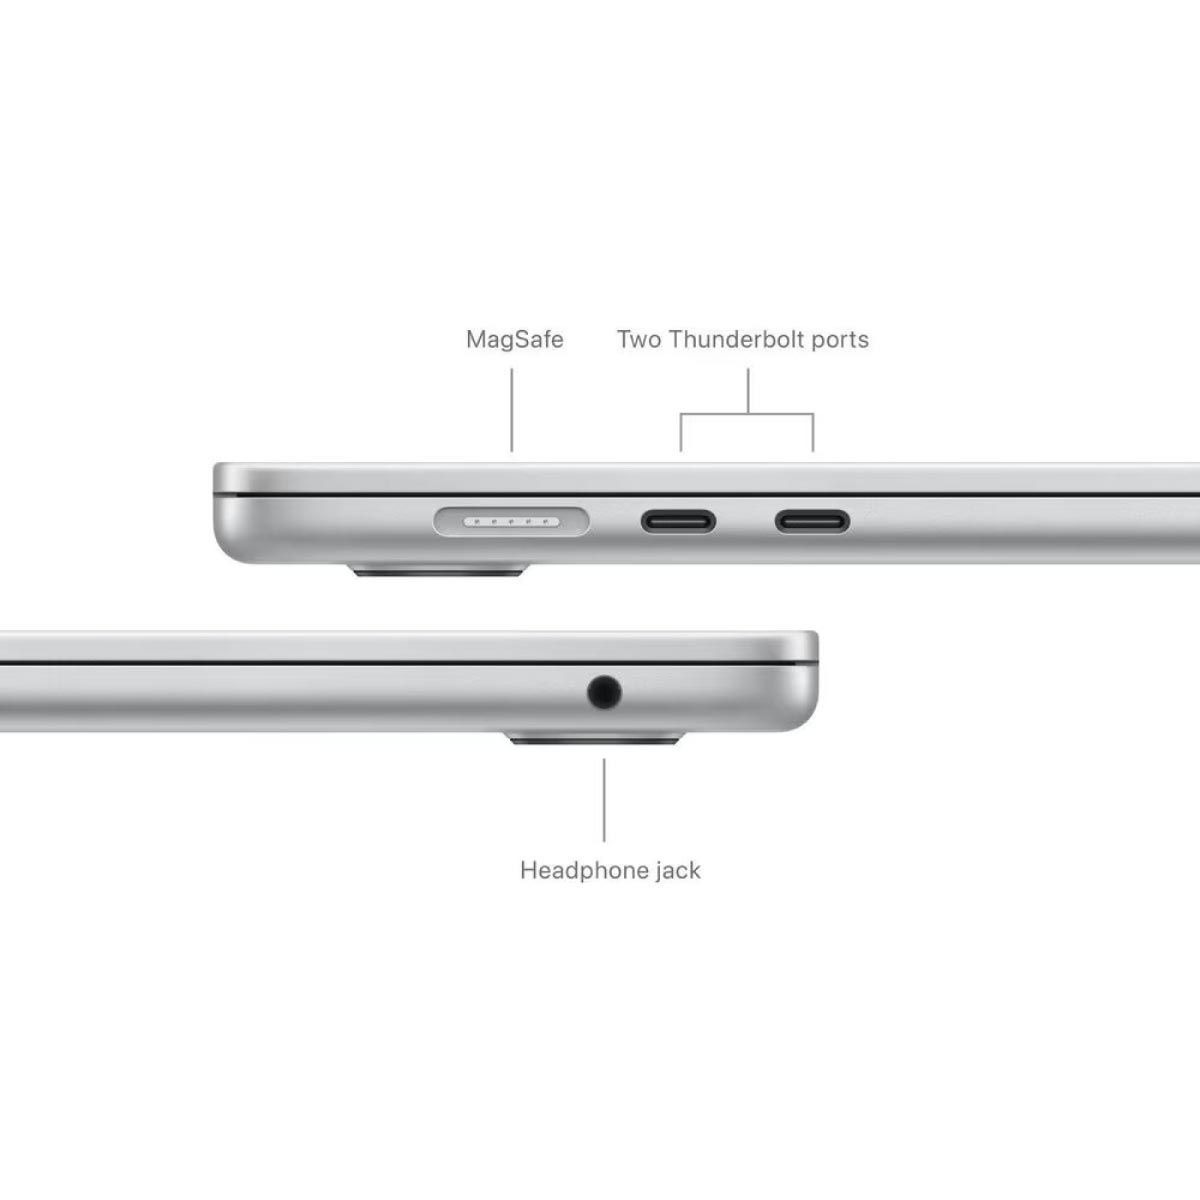 Apple Macbook Air (รุ่น 15 นิ้ว , ชิป M3) 256GB Silver